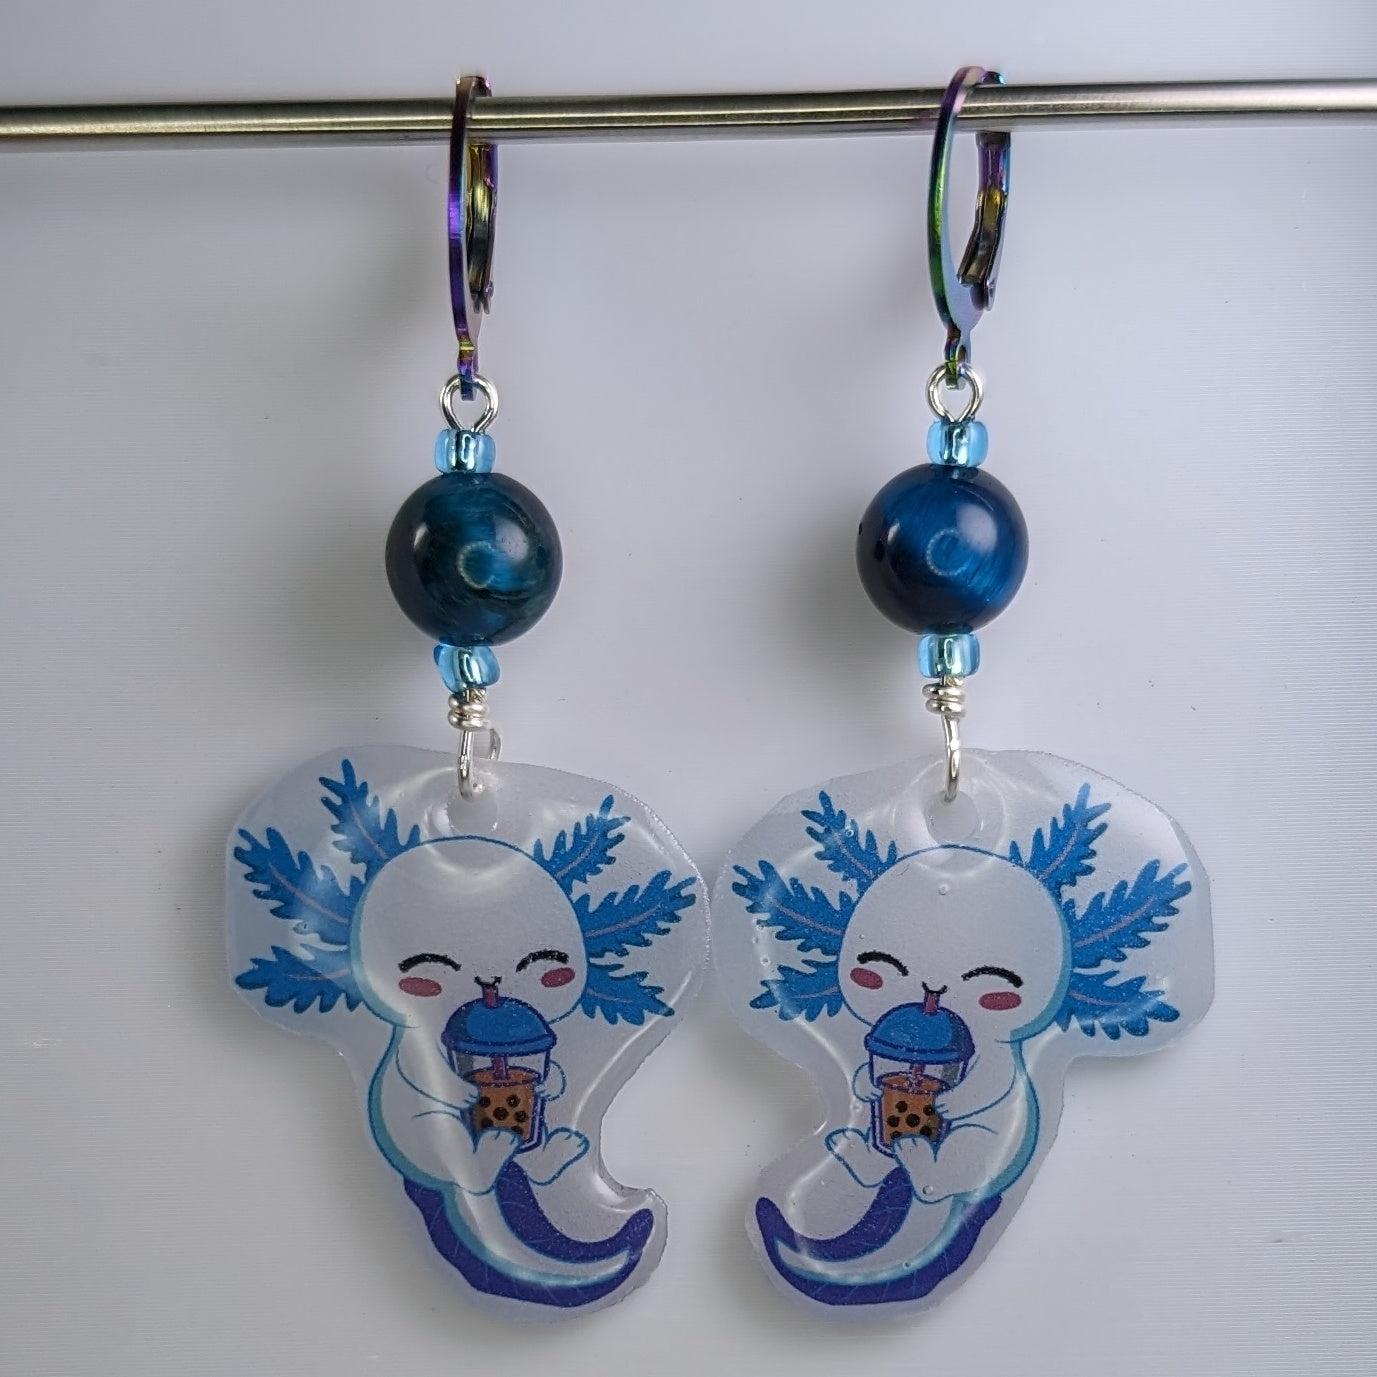 Boba-lotl Earrings & Stitch Markers